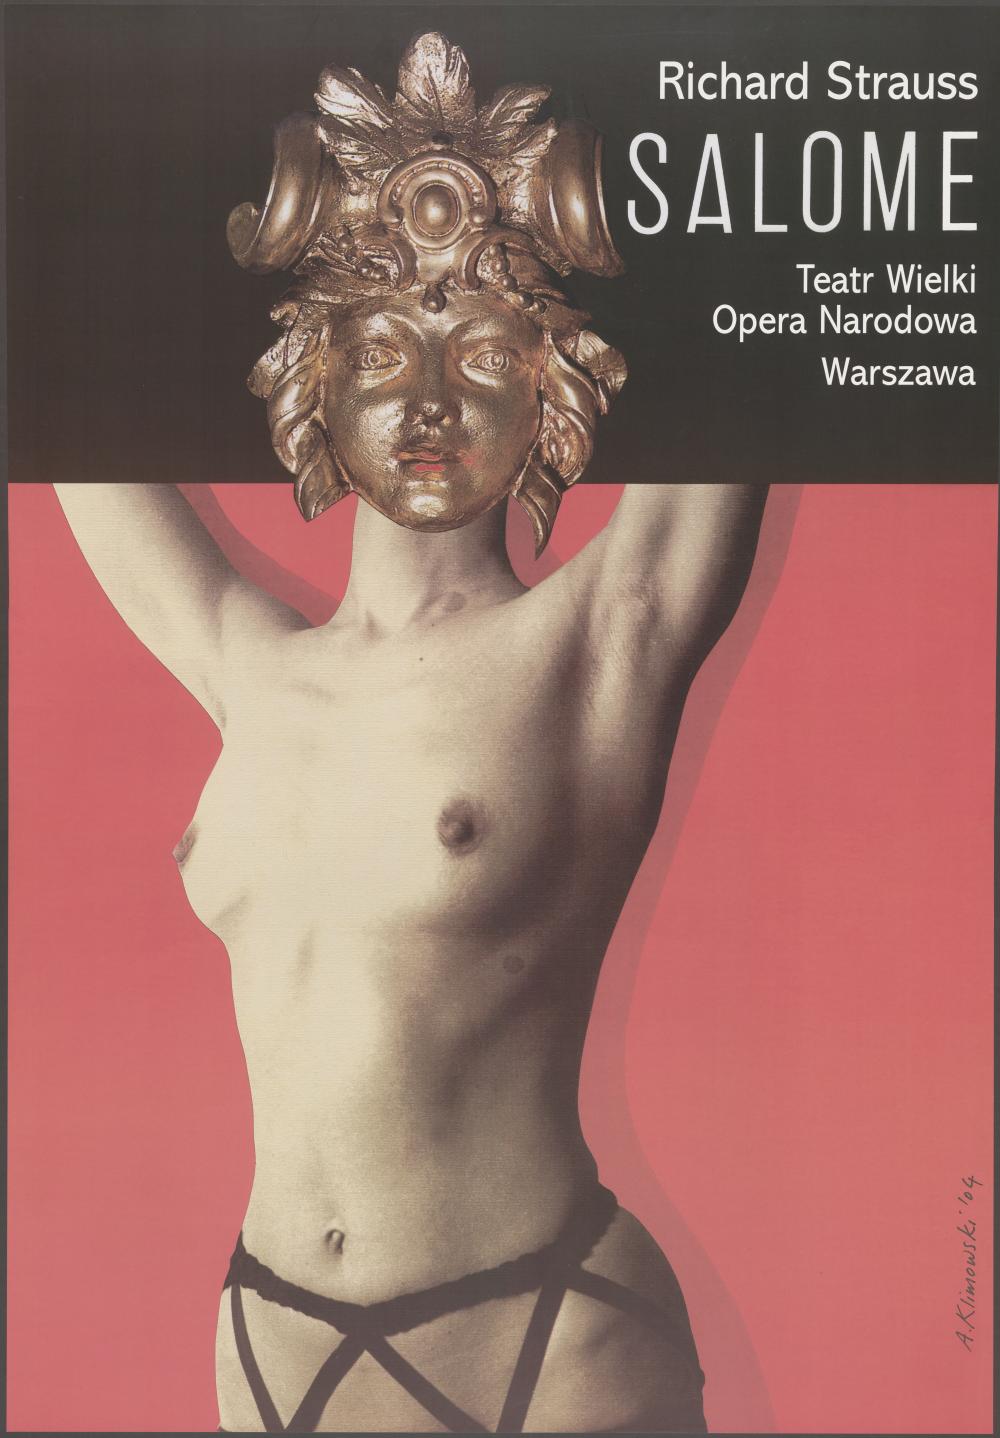 Plakat „Salome” Richard Strauss 25-06-2004